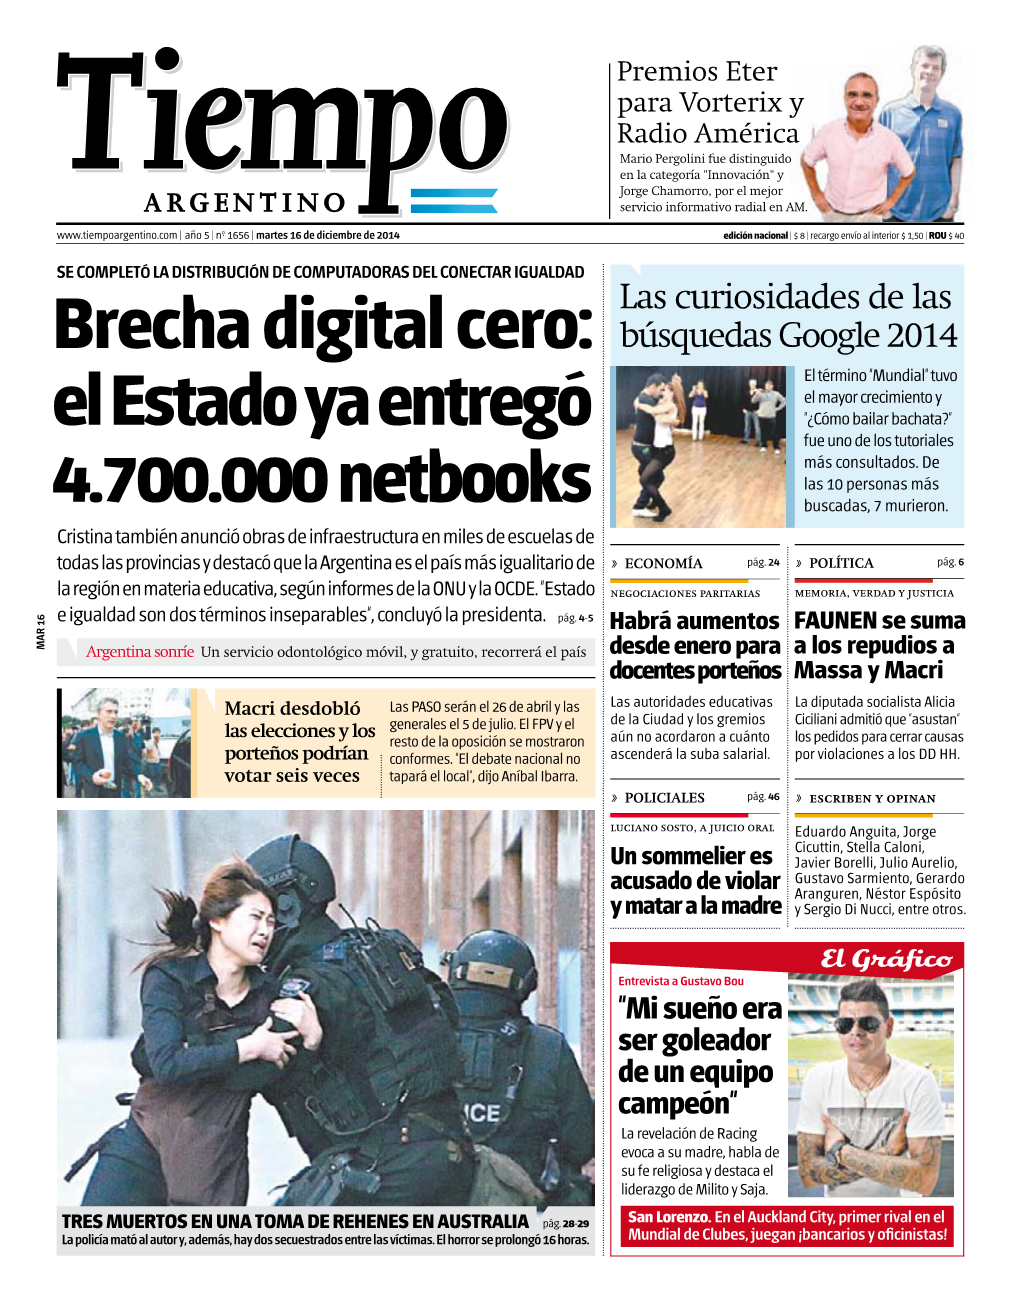 El Estado Ya Entregó 4.700.000 Netbooks